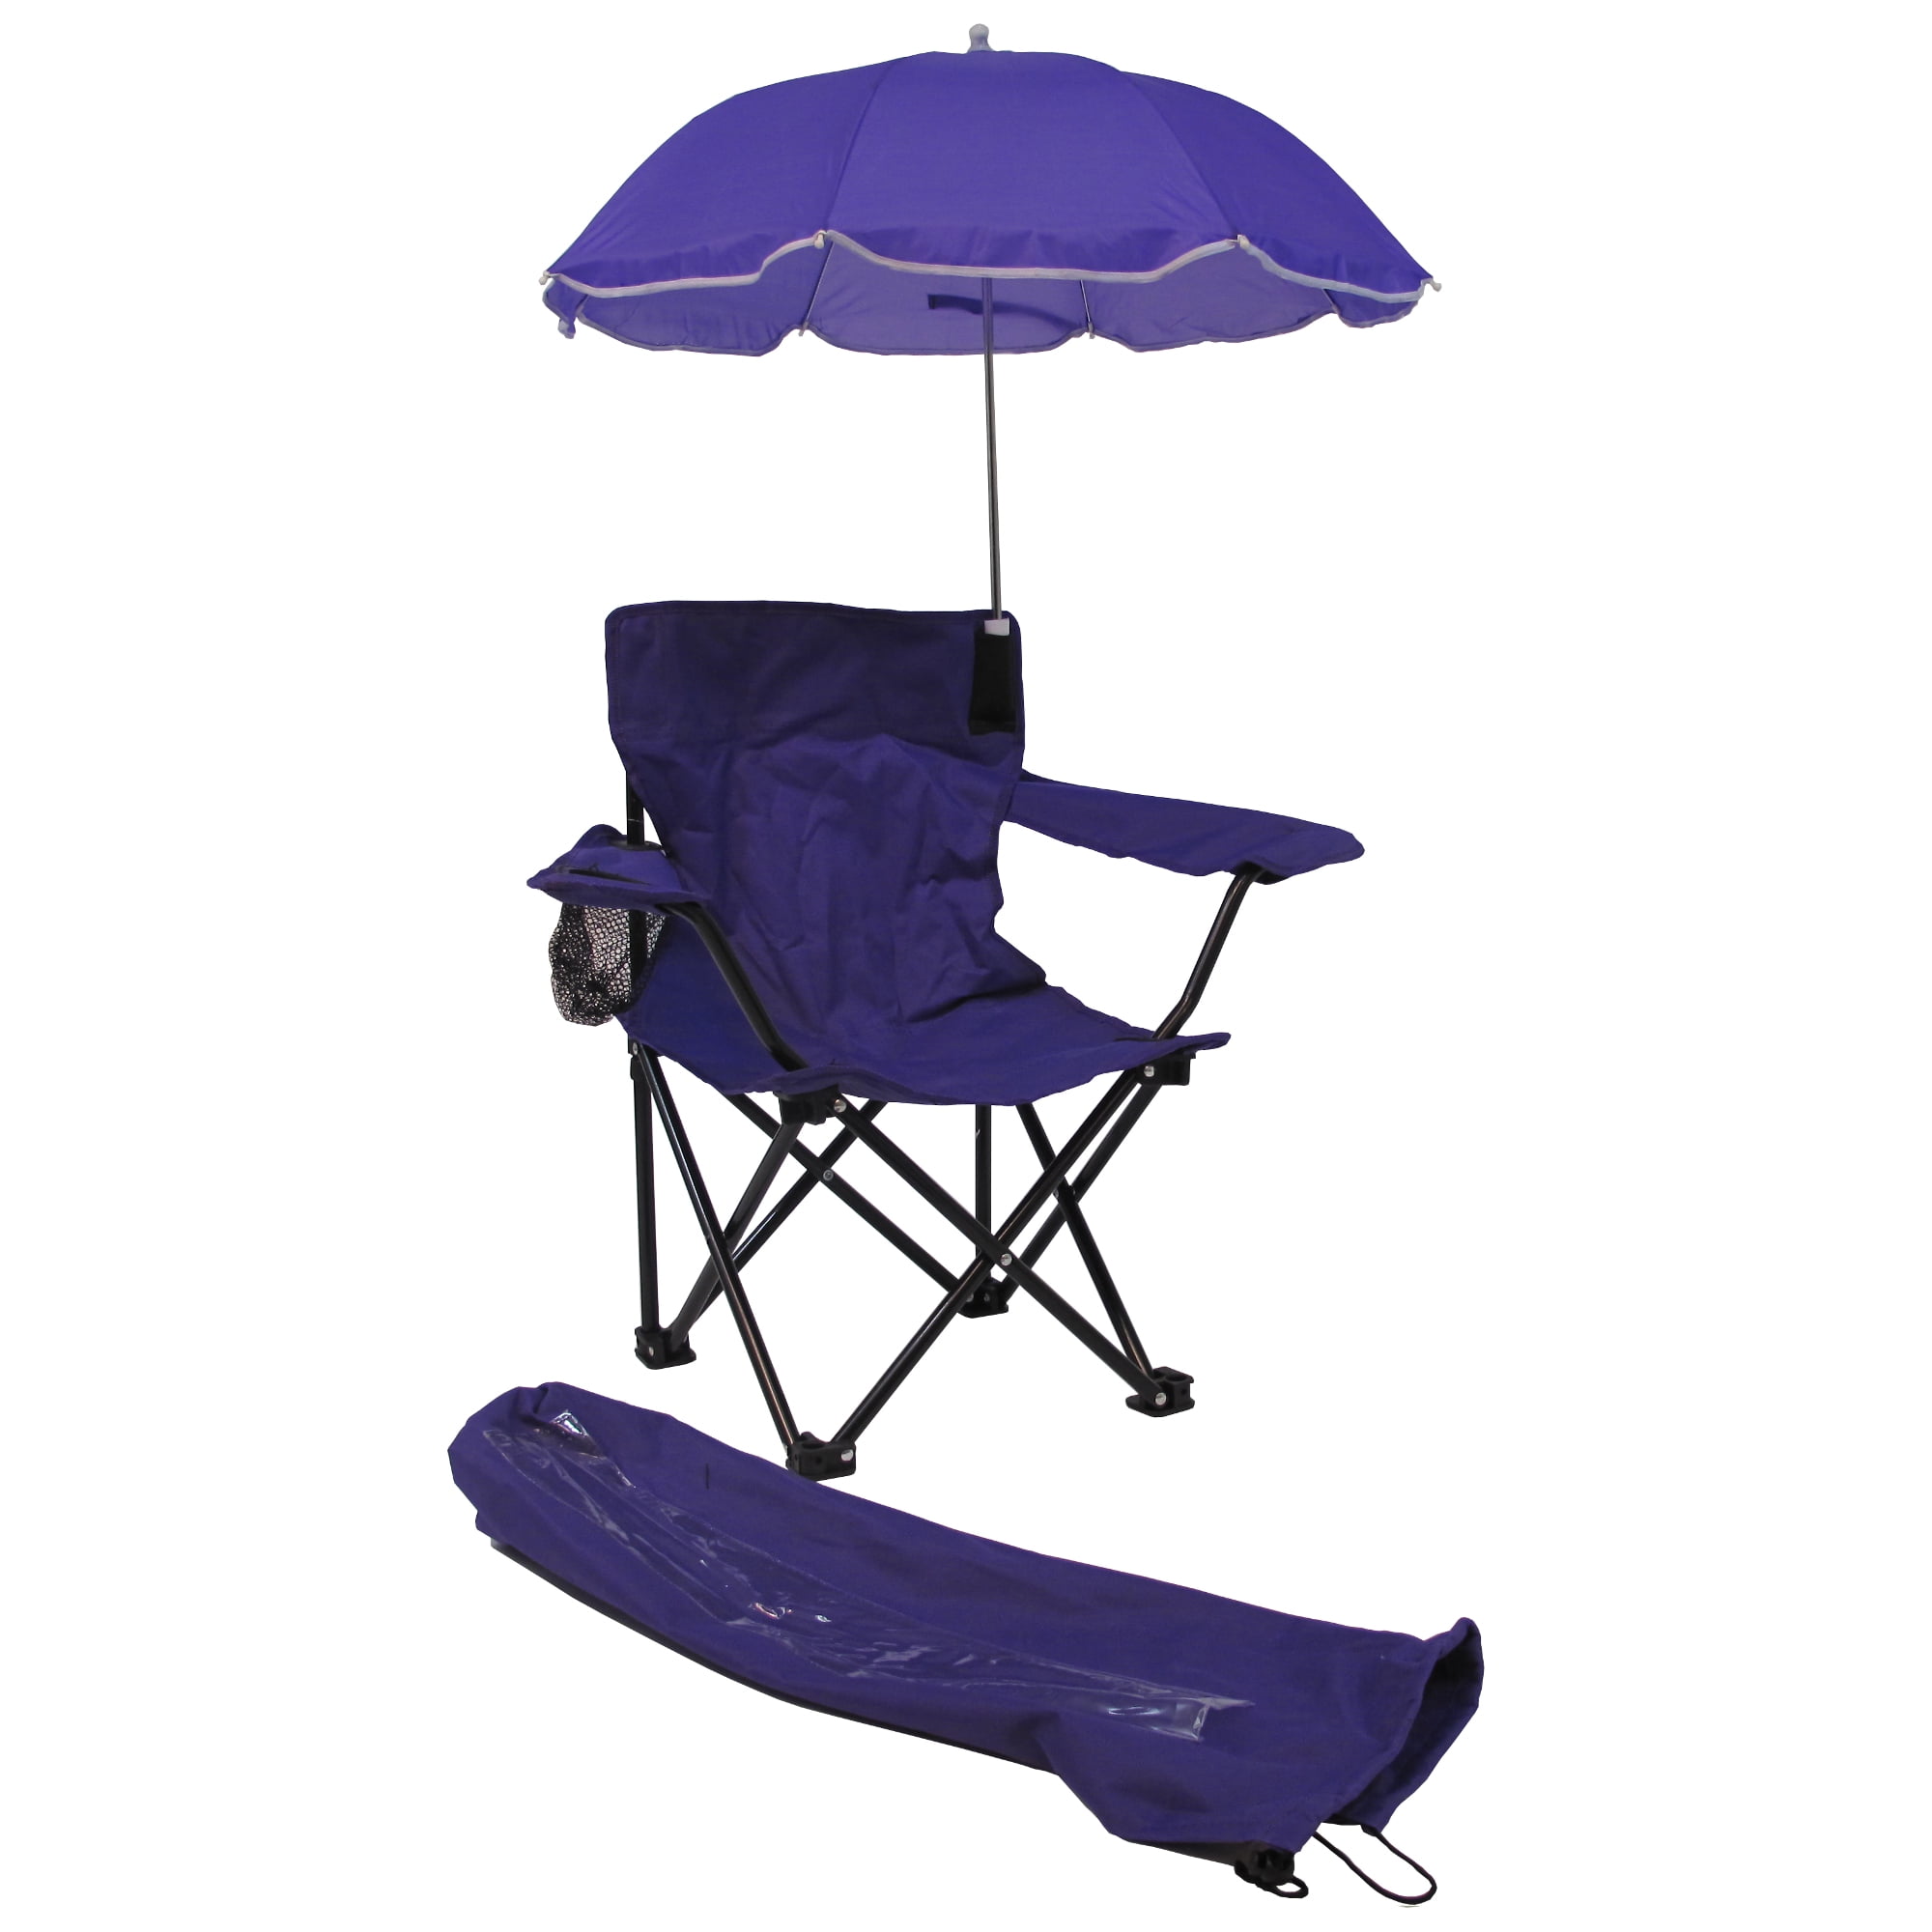 Creatice Beach Umbrella And Chair Set Walmart with Simple Decor